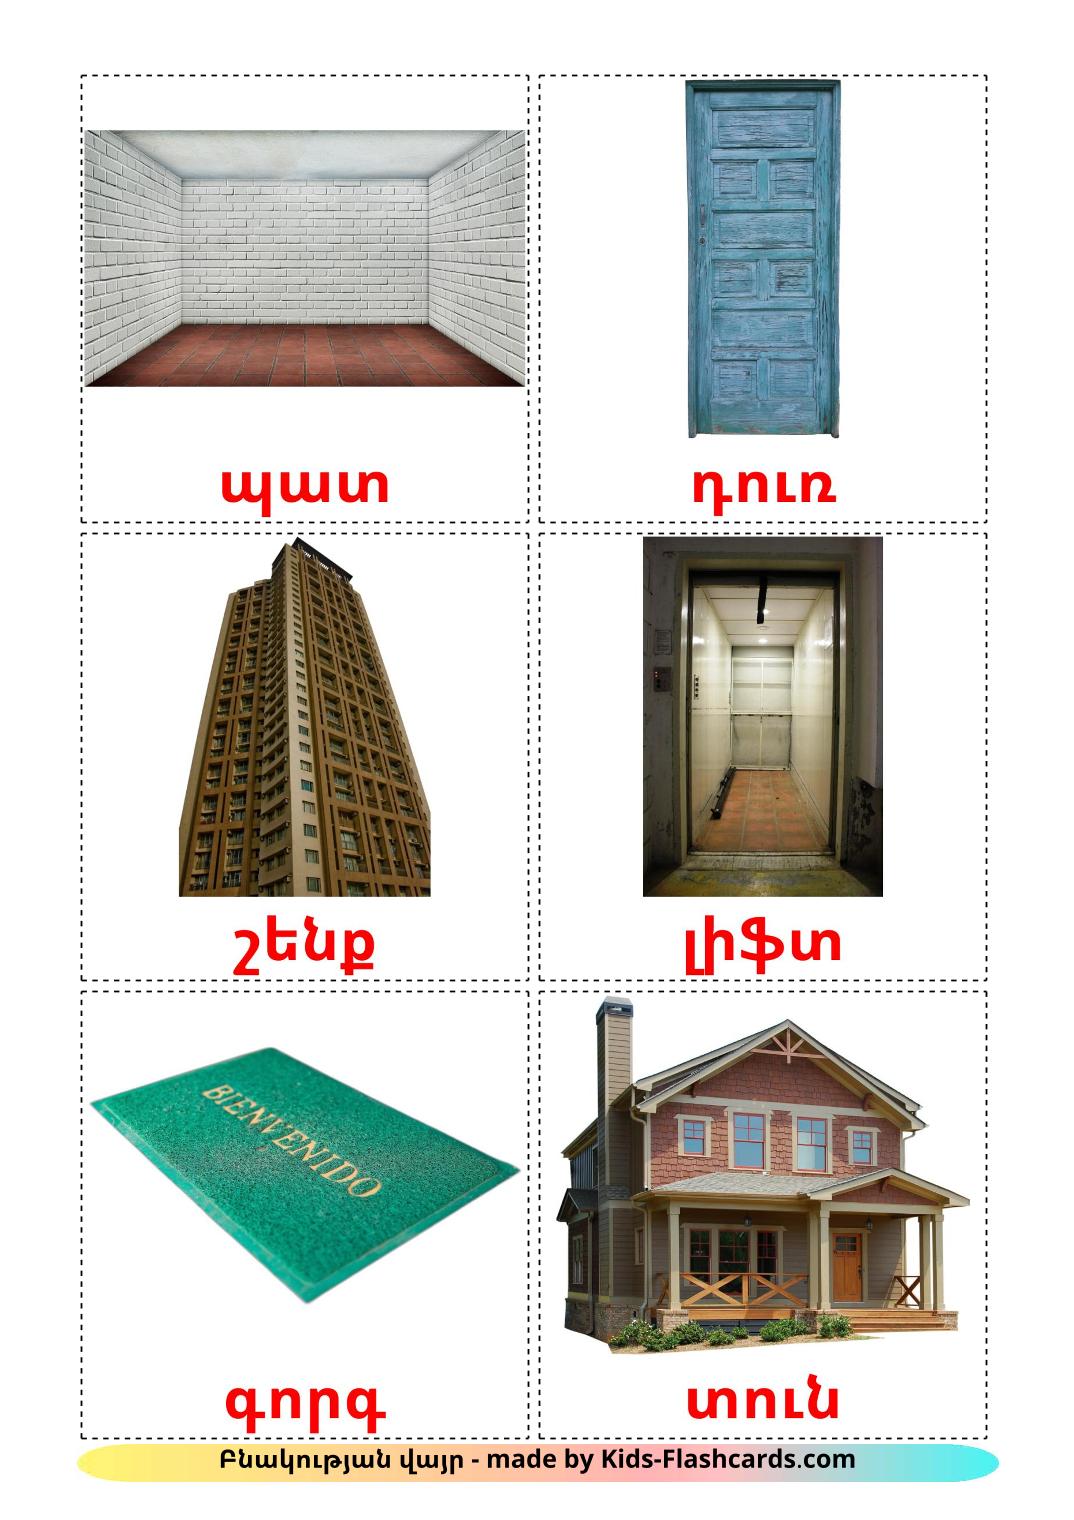 Casa - 25 flashcards armeno stampabili gratuitamente